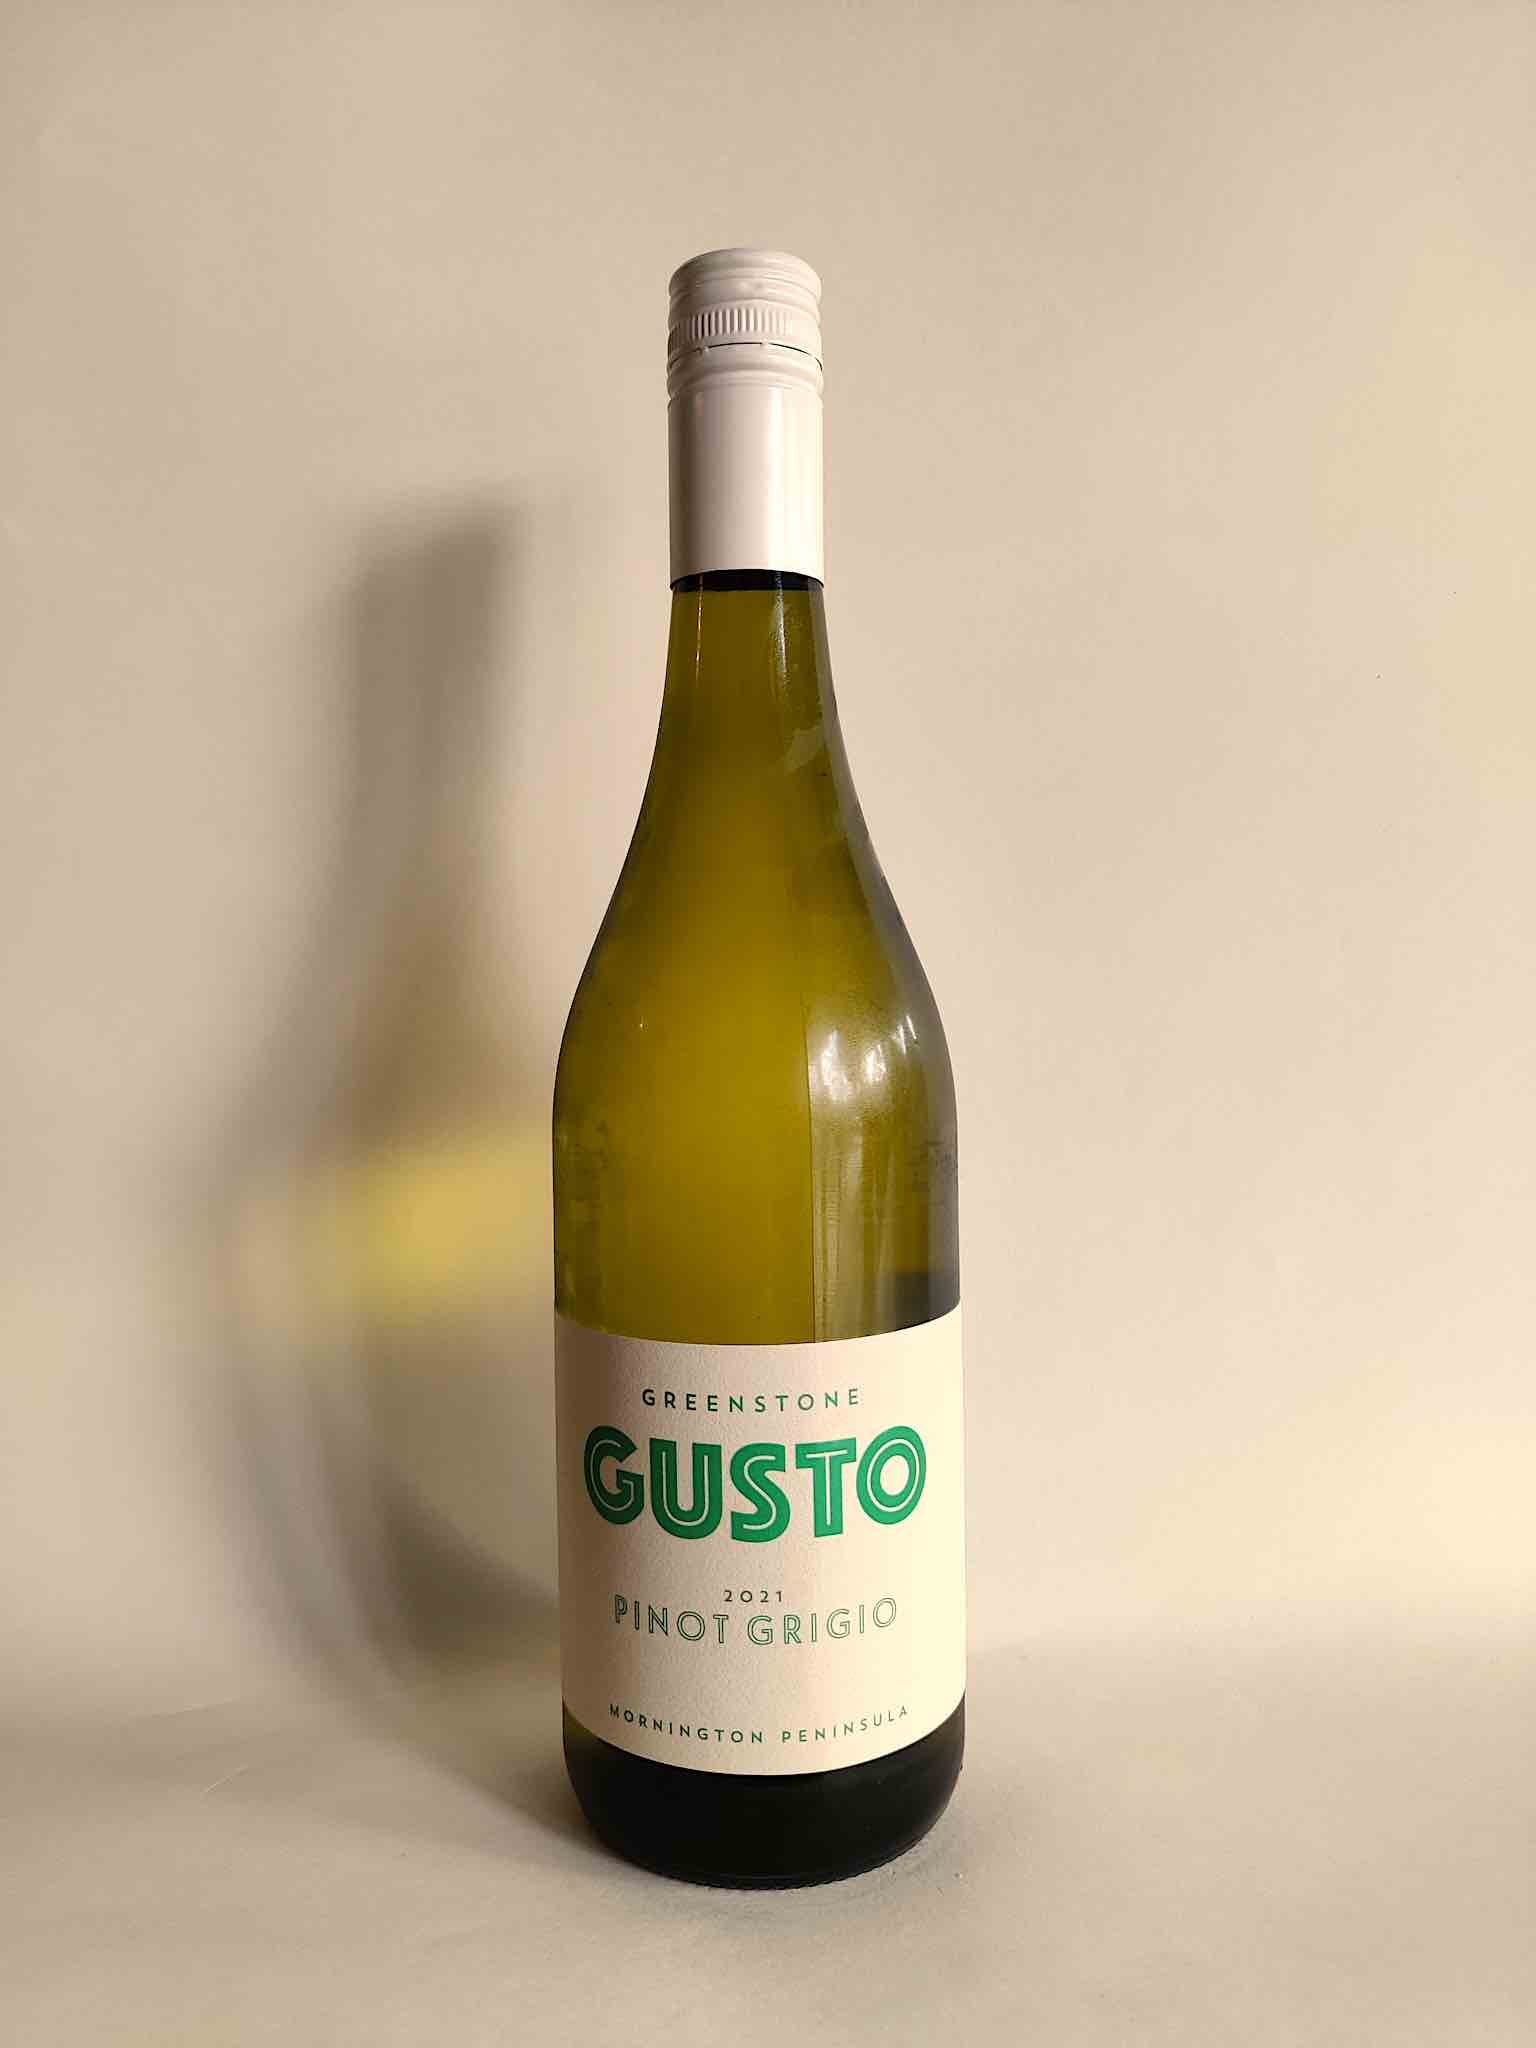 A bottle of Greenstone Gusto Pinot Grigio from Mornington Peninsula, Victoria. 